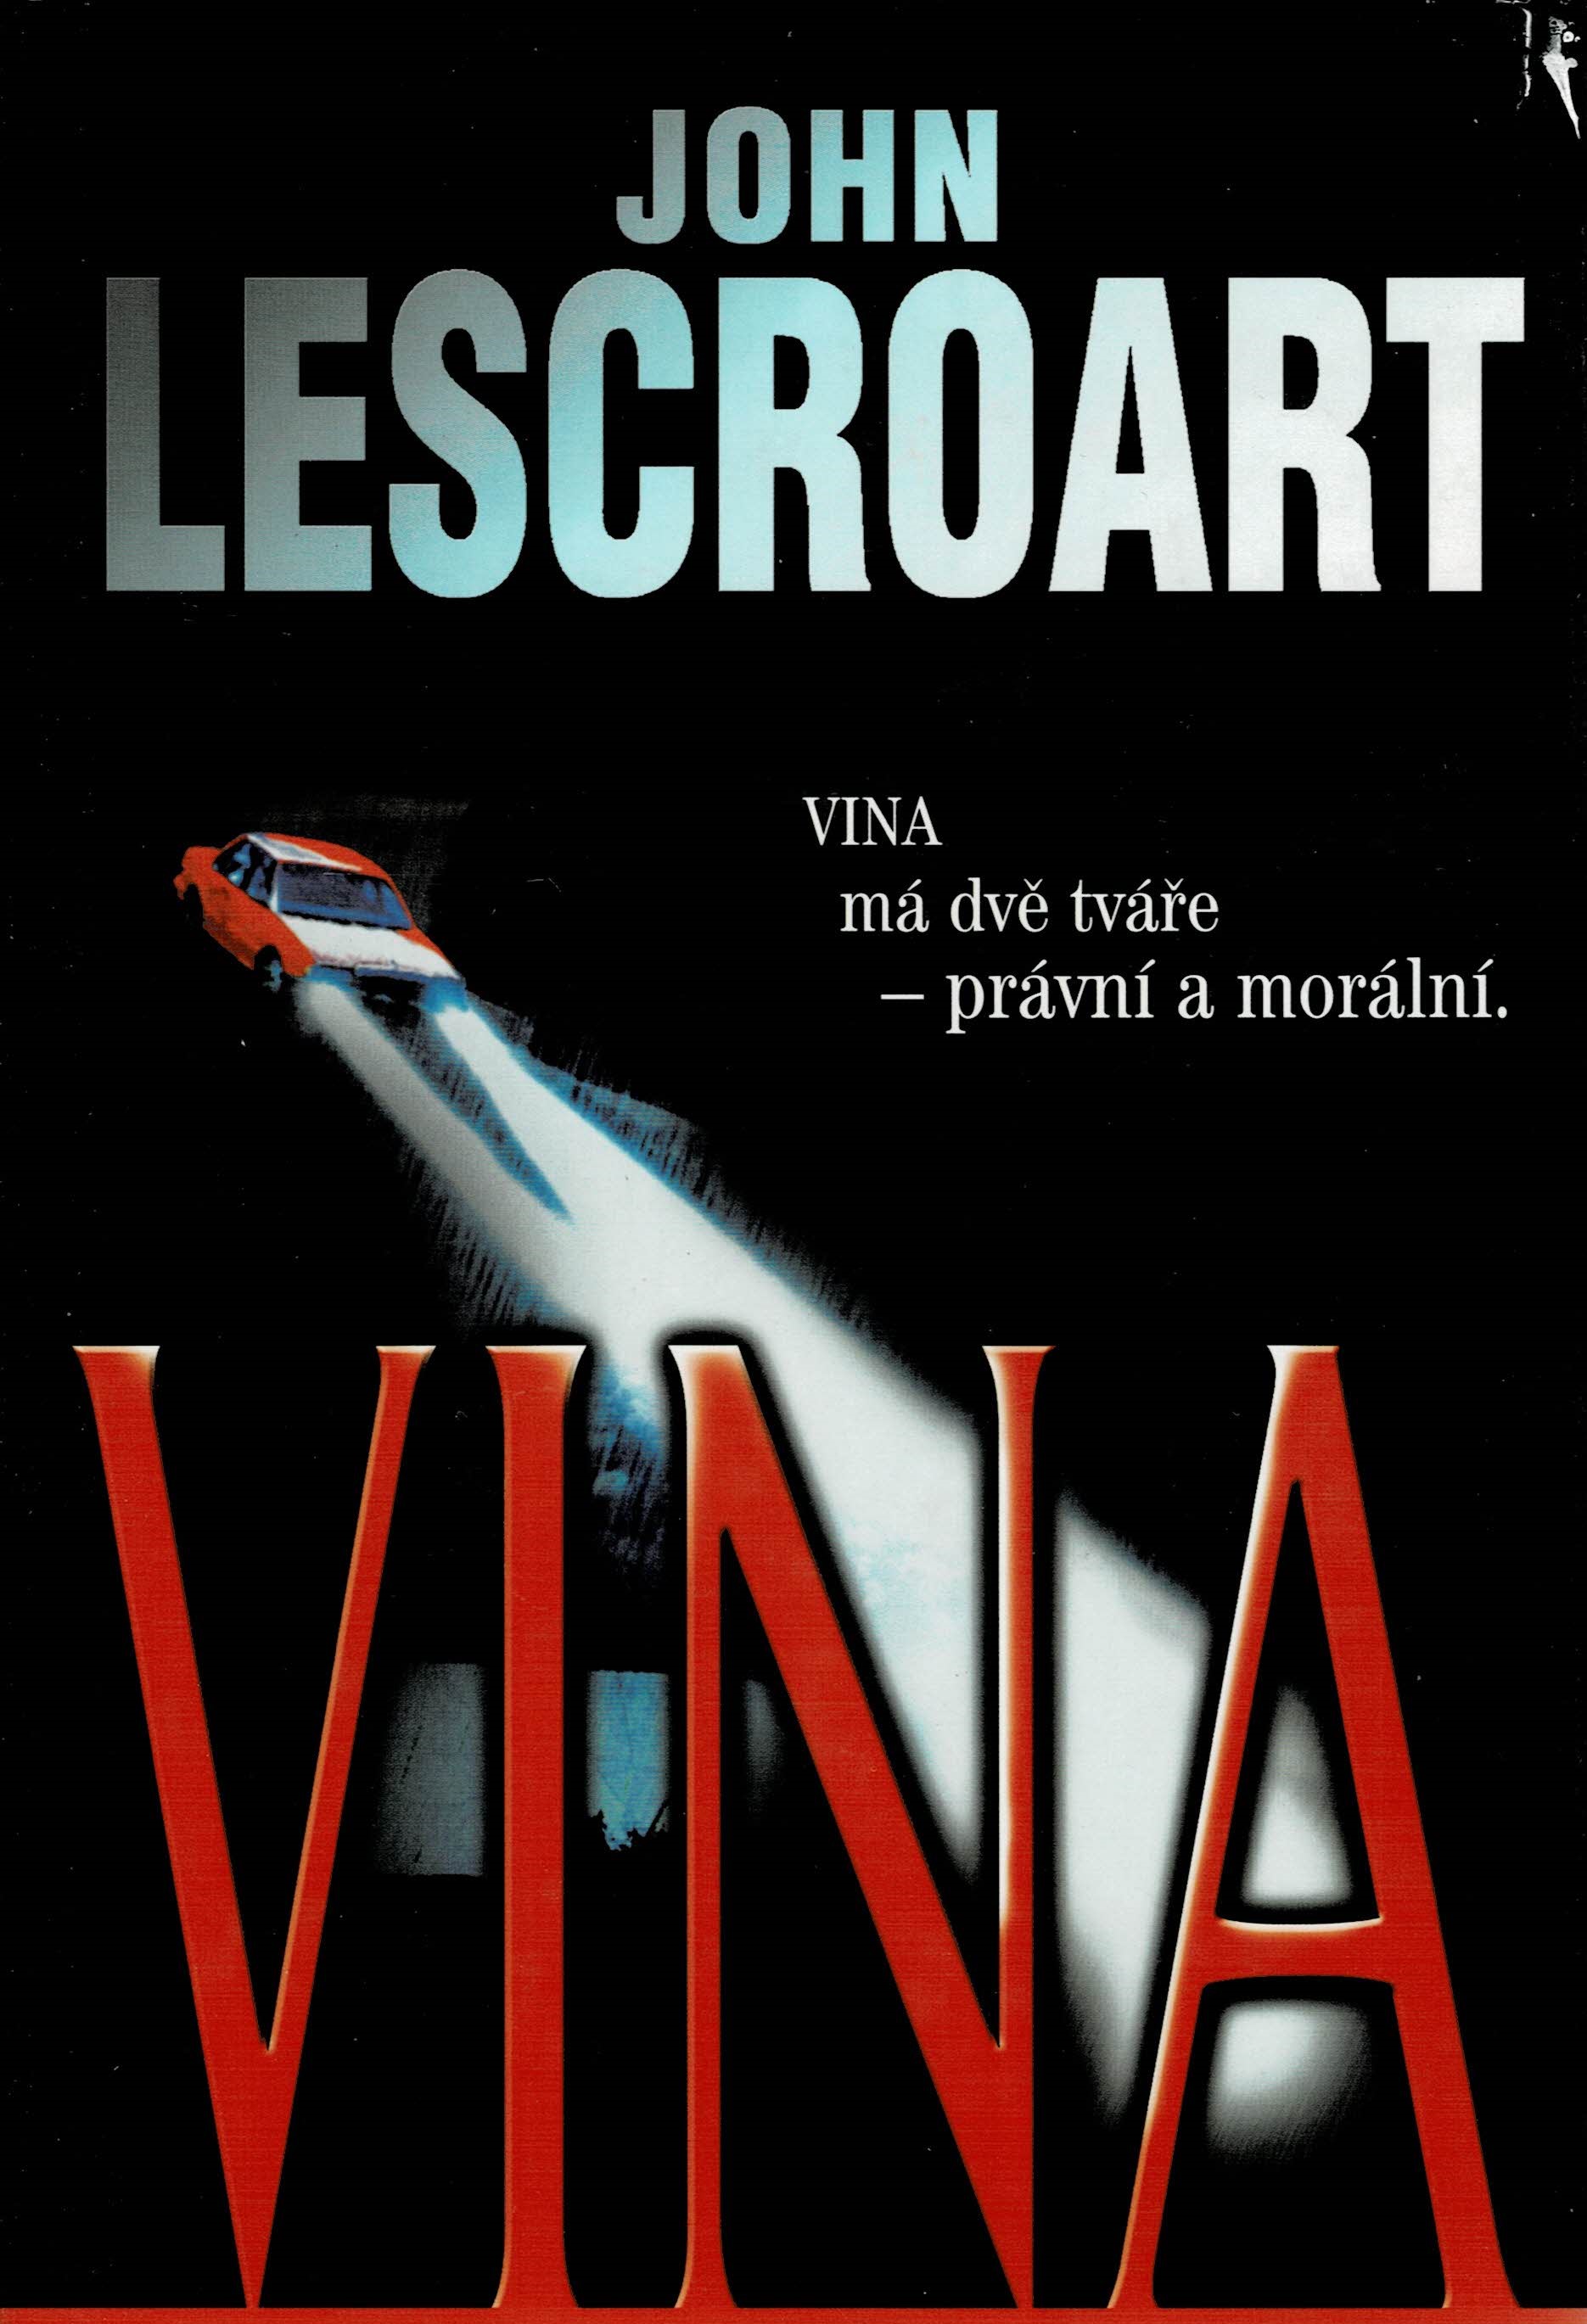 Lescroart, John: Vina